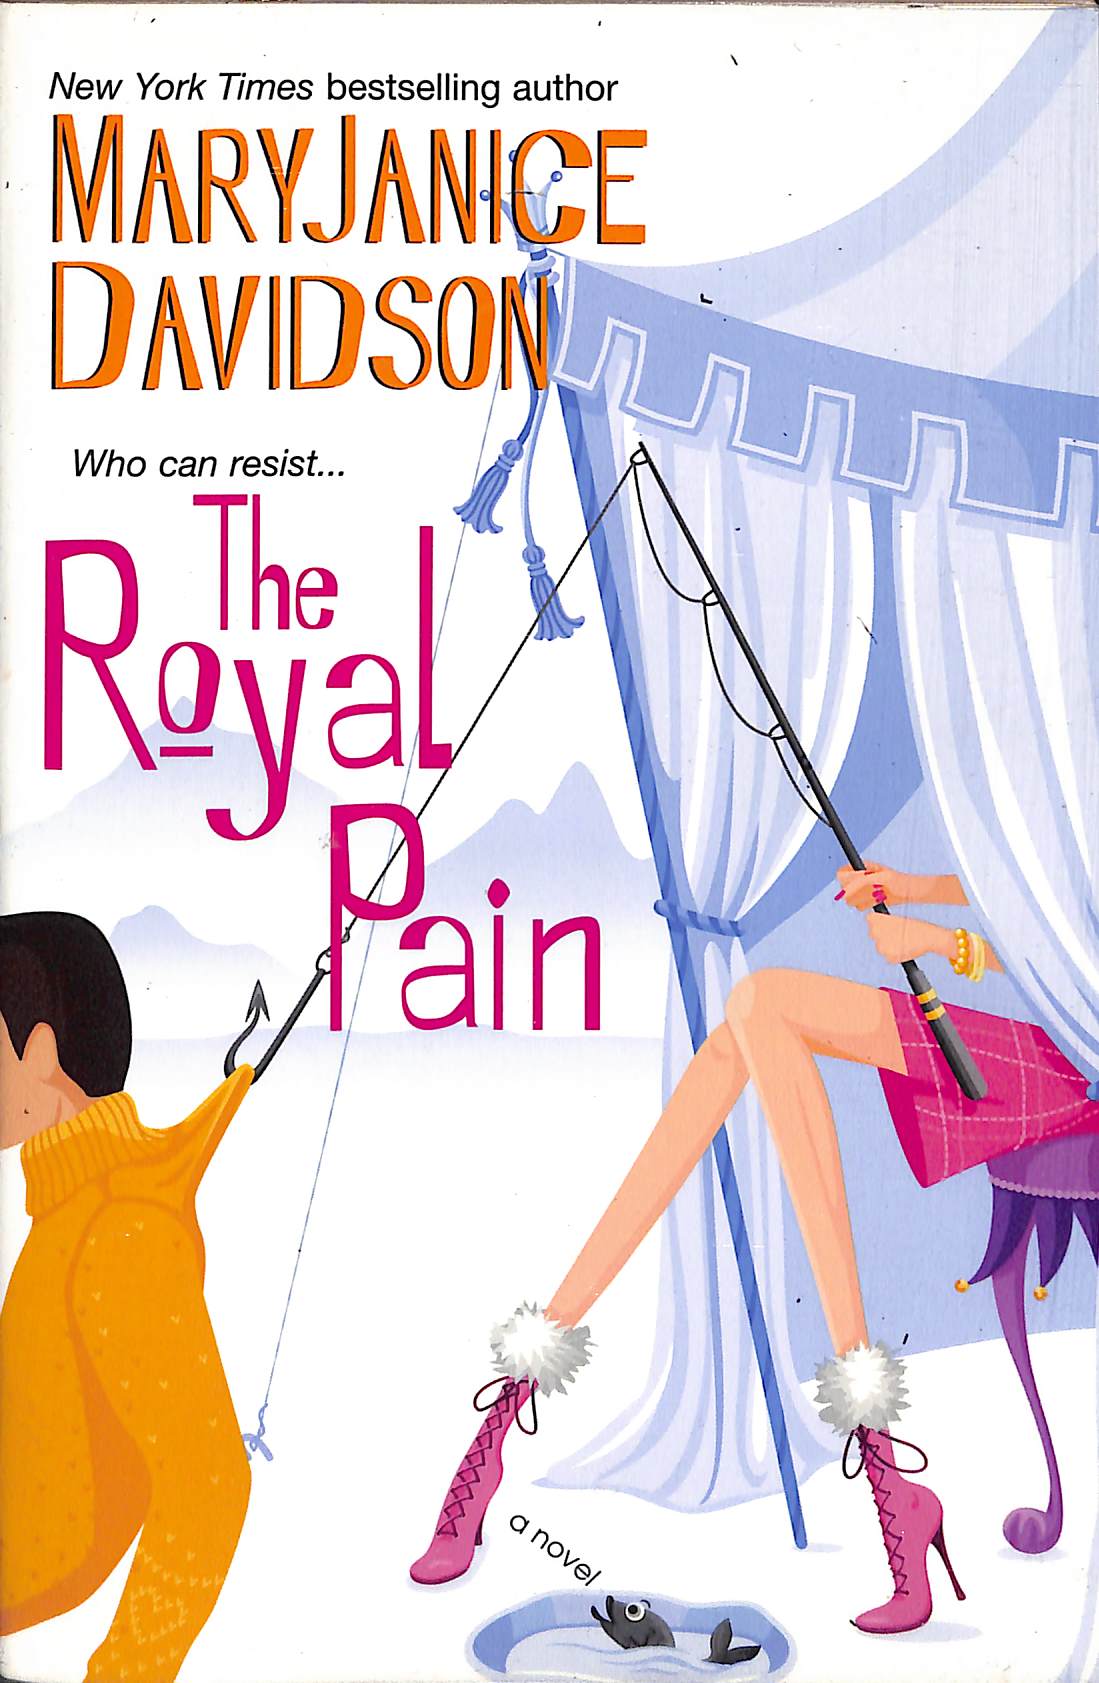 "The Royal Pain" 2005 DAVIDSON, Mary Janice